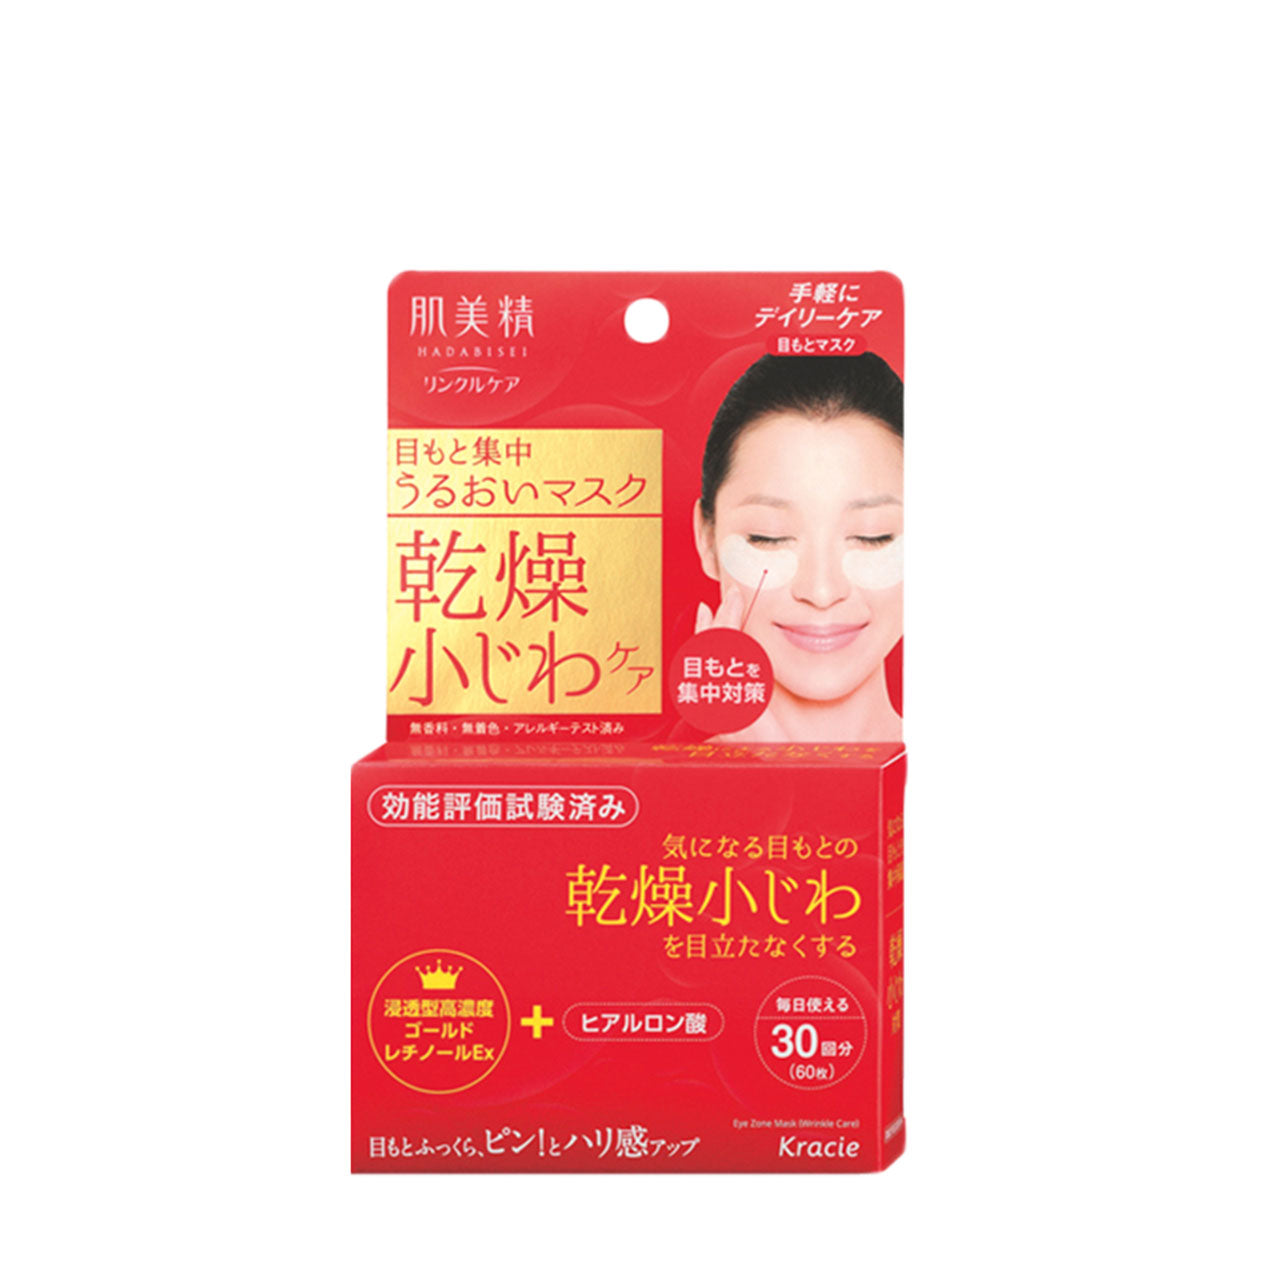 Kracie Hadabisei Intensive Wrinkle Care Eye Mask 60PCS | Sasa Global eShop